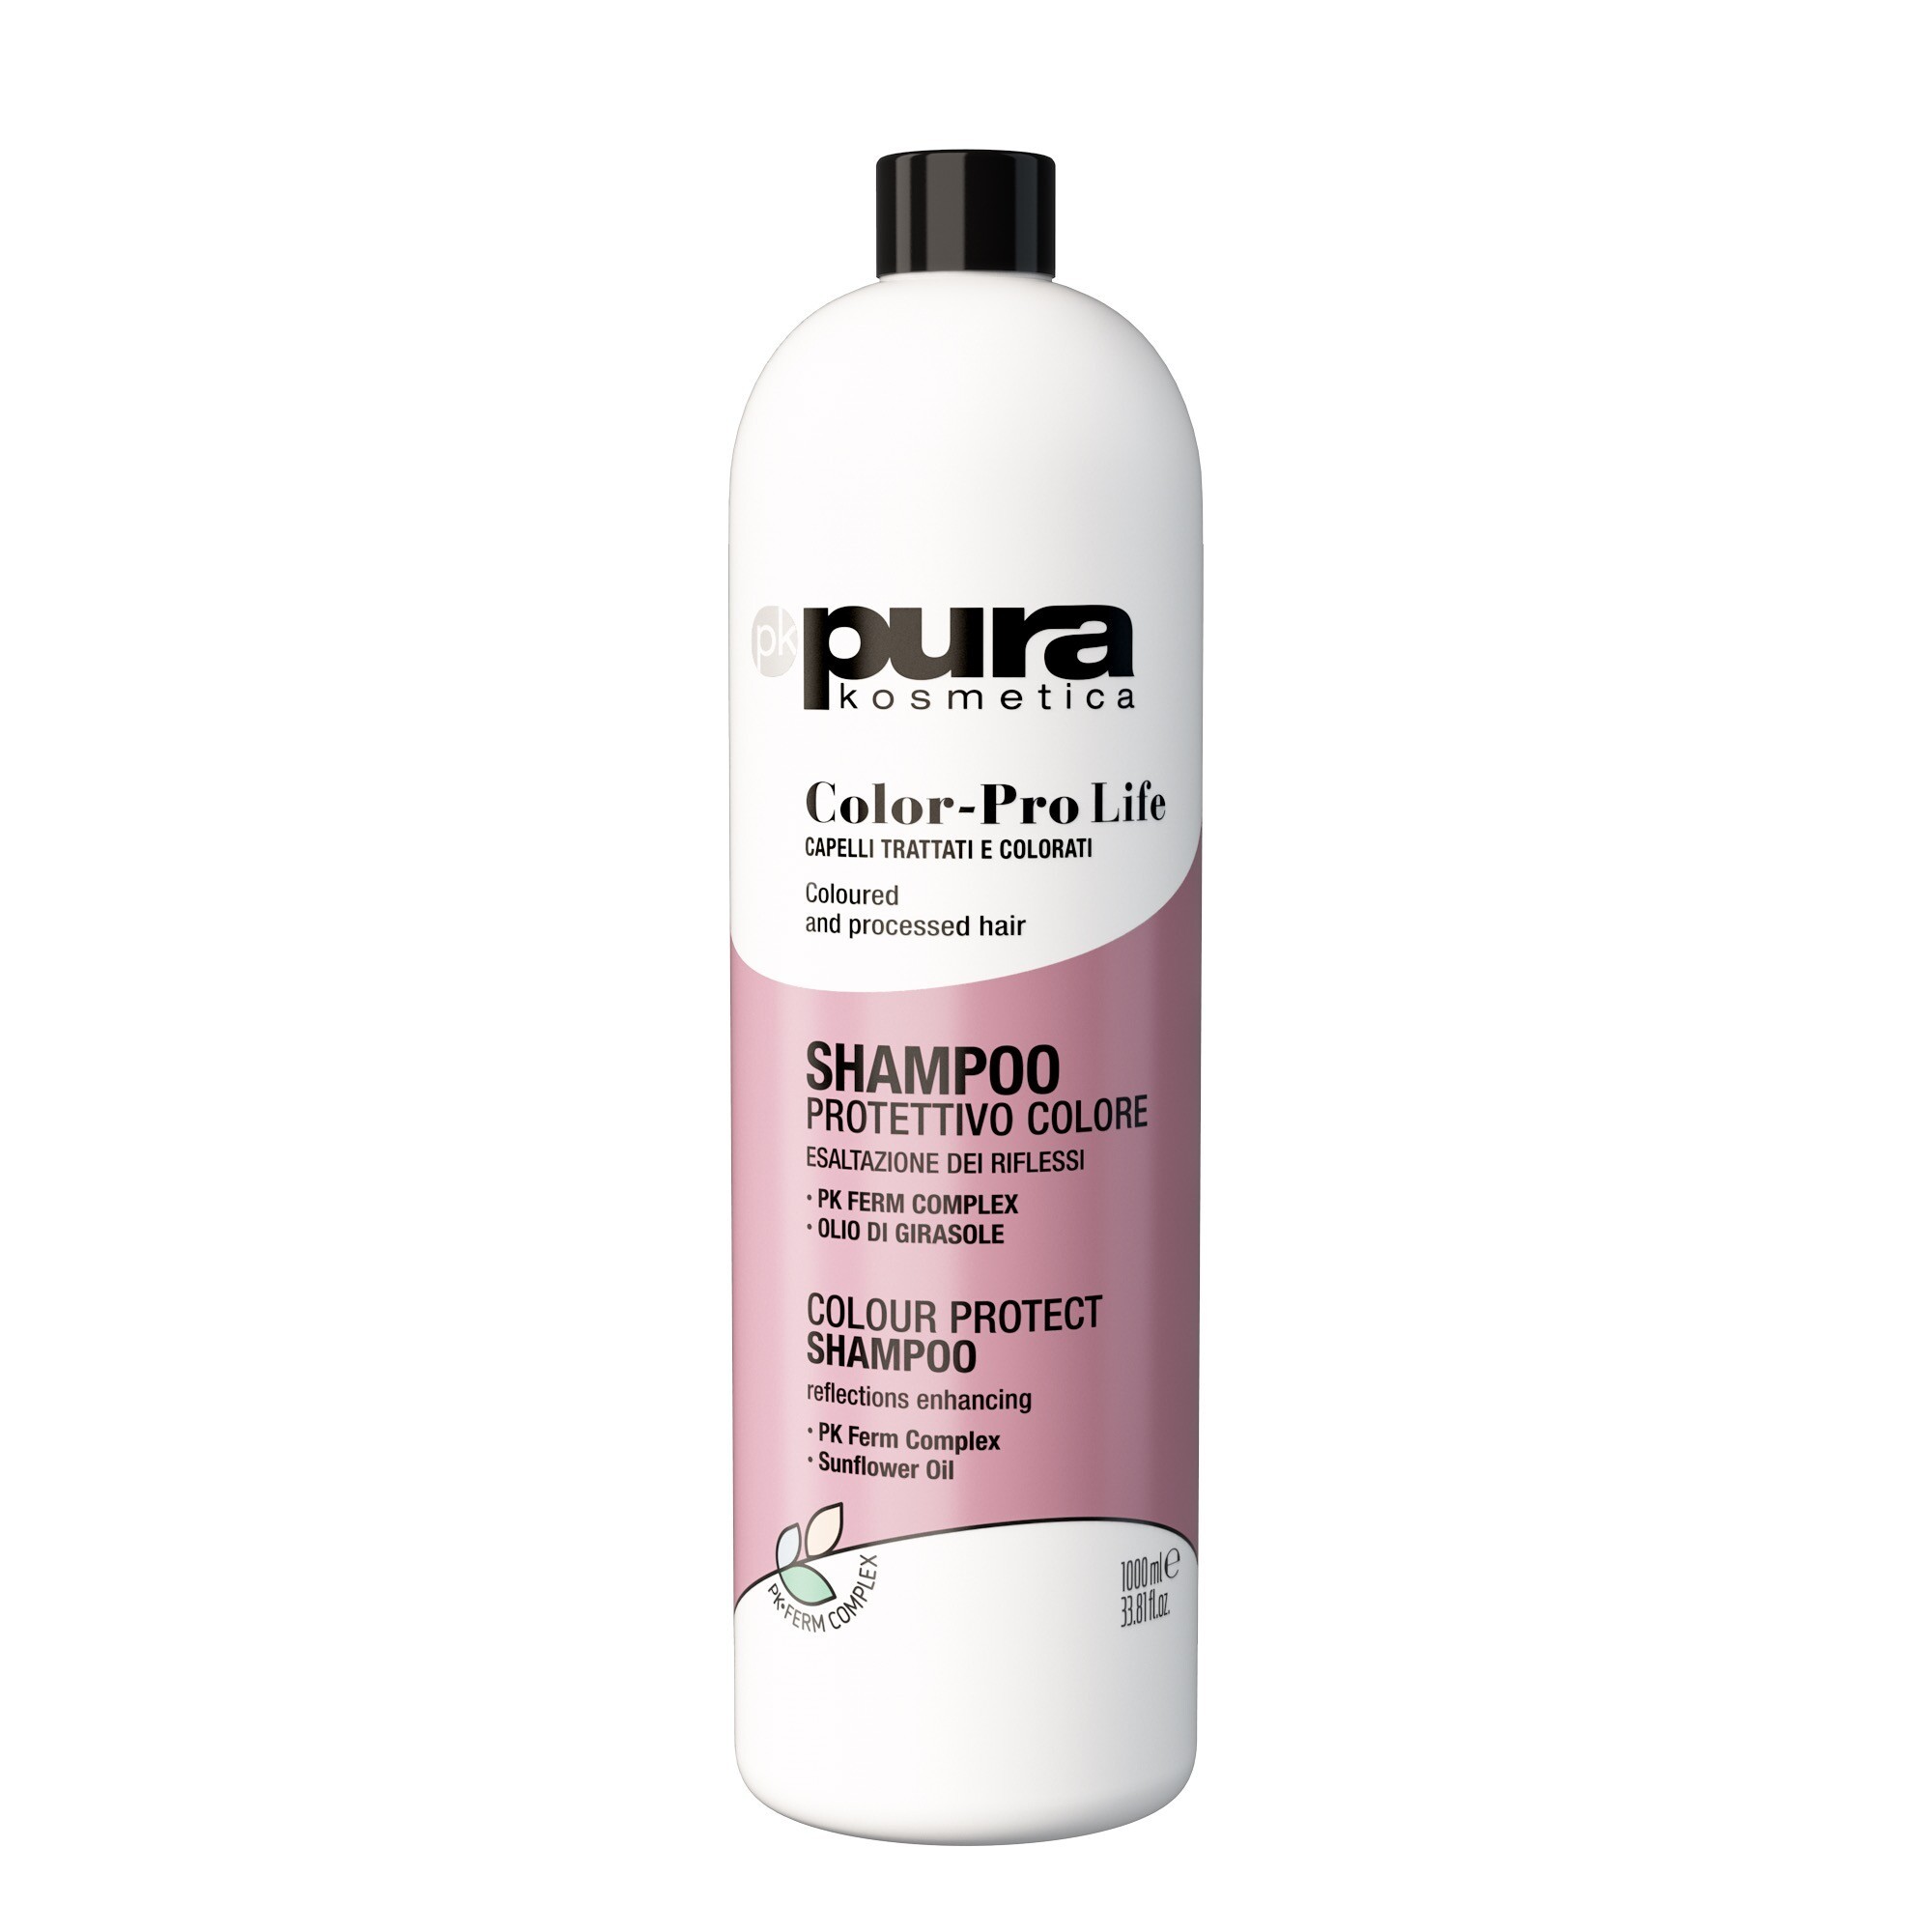 Pura Kosmetica Color Pro Life Shampoo 1000ml